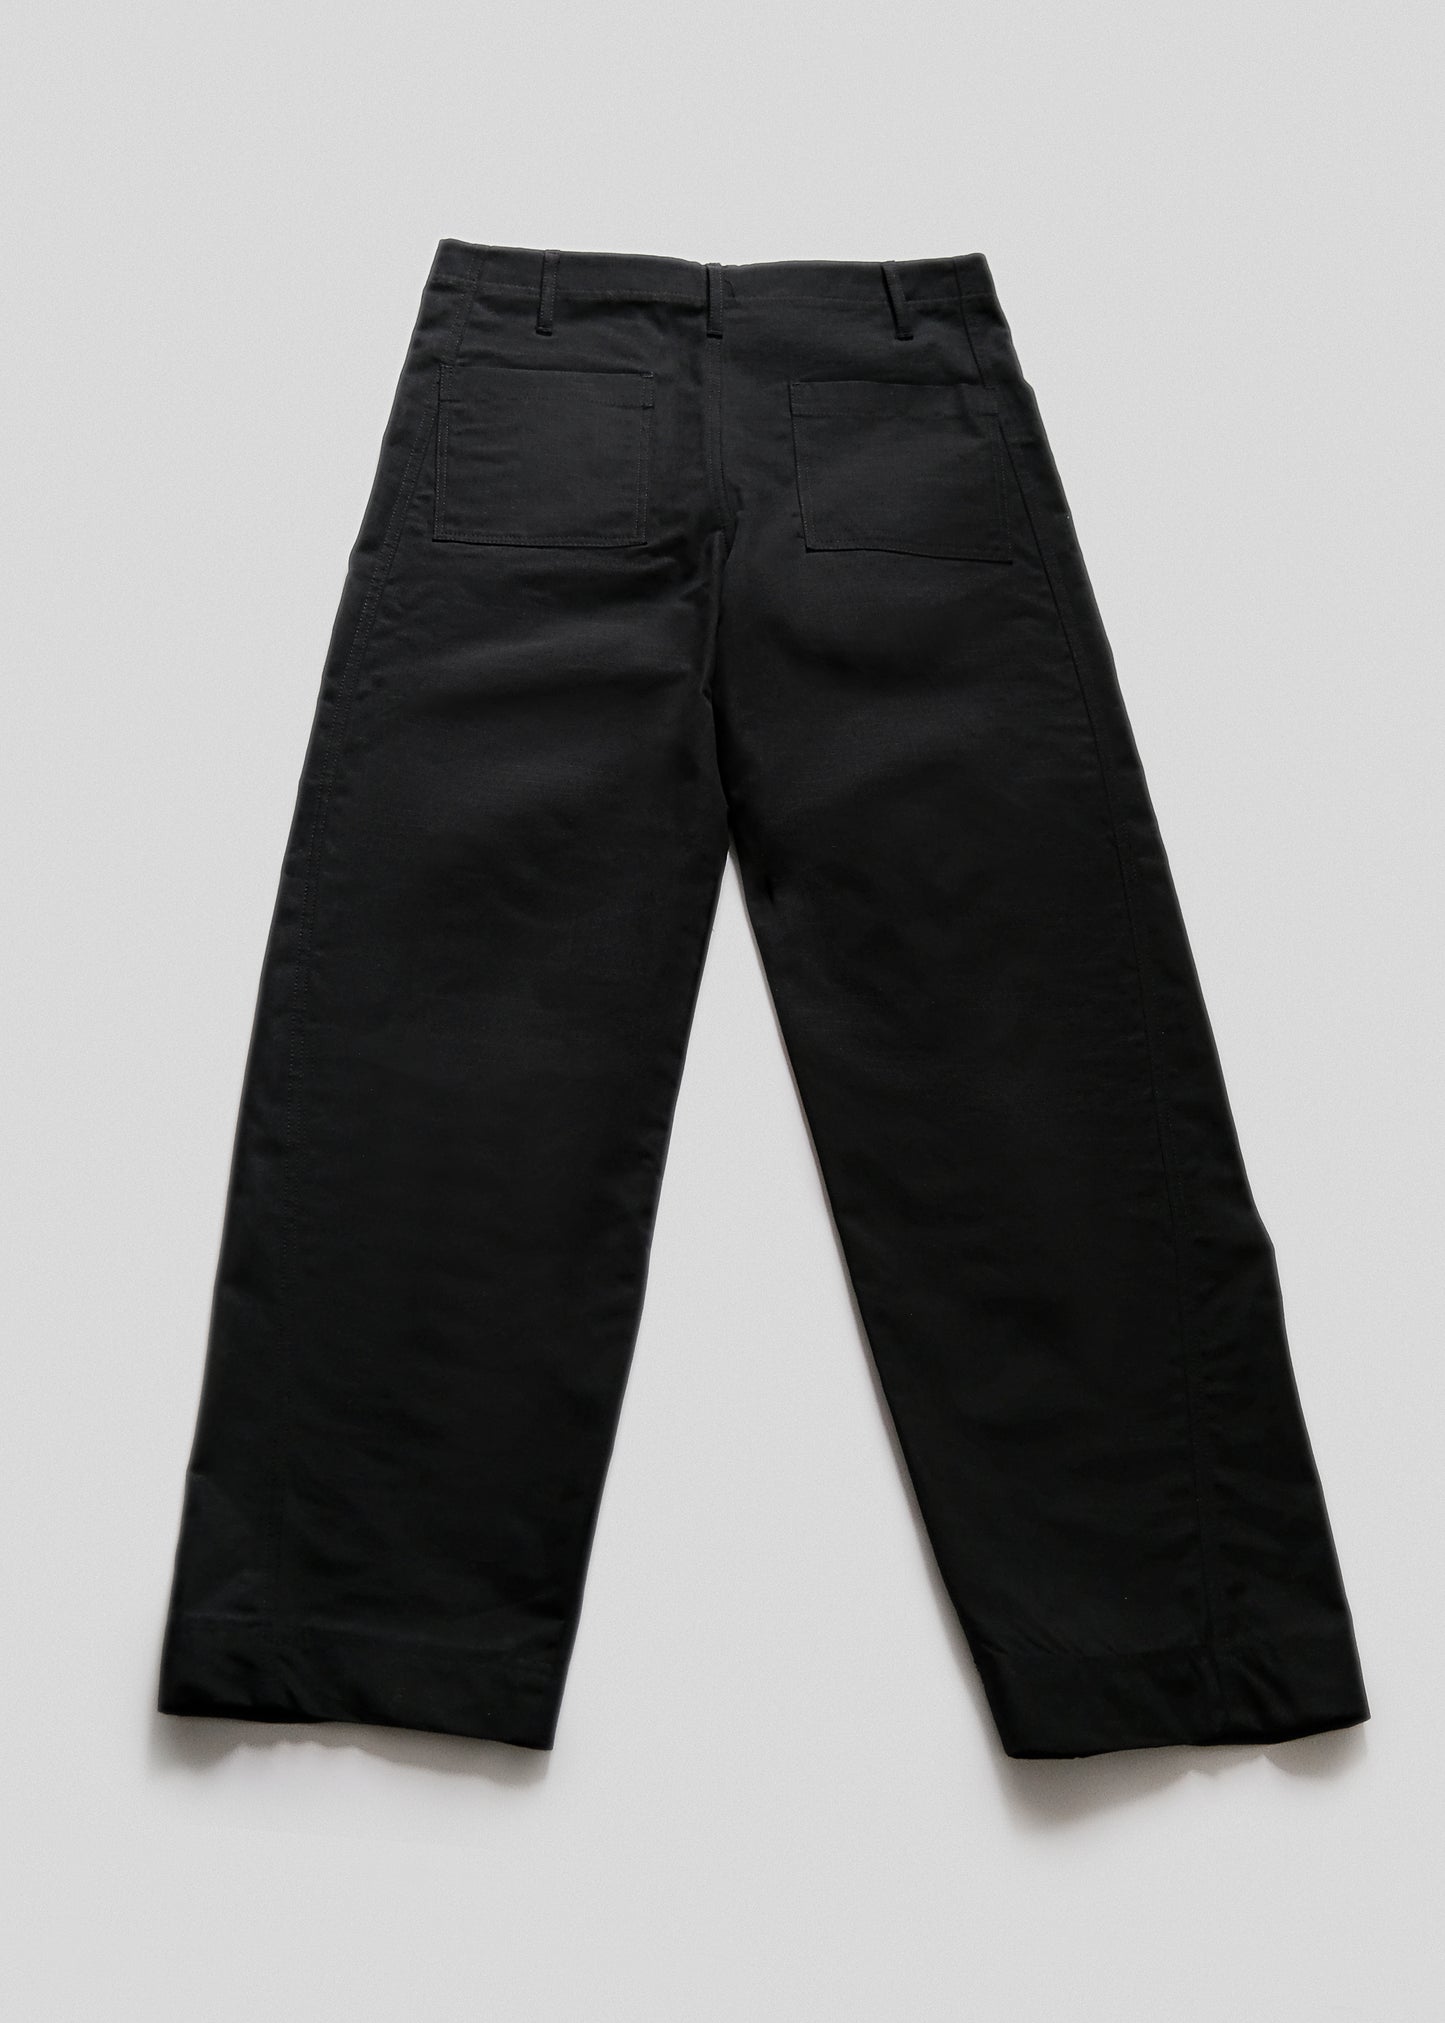 flat back lay of slacker pants in color black